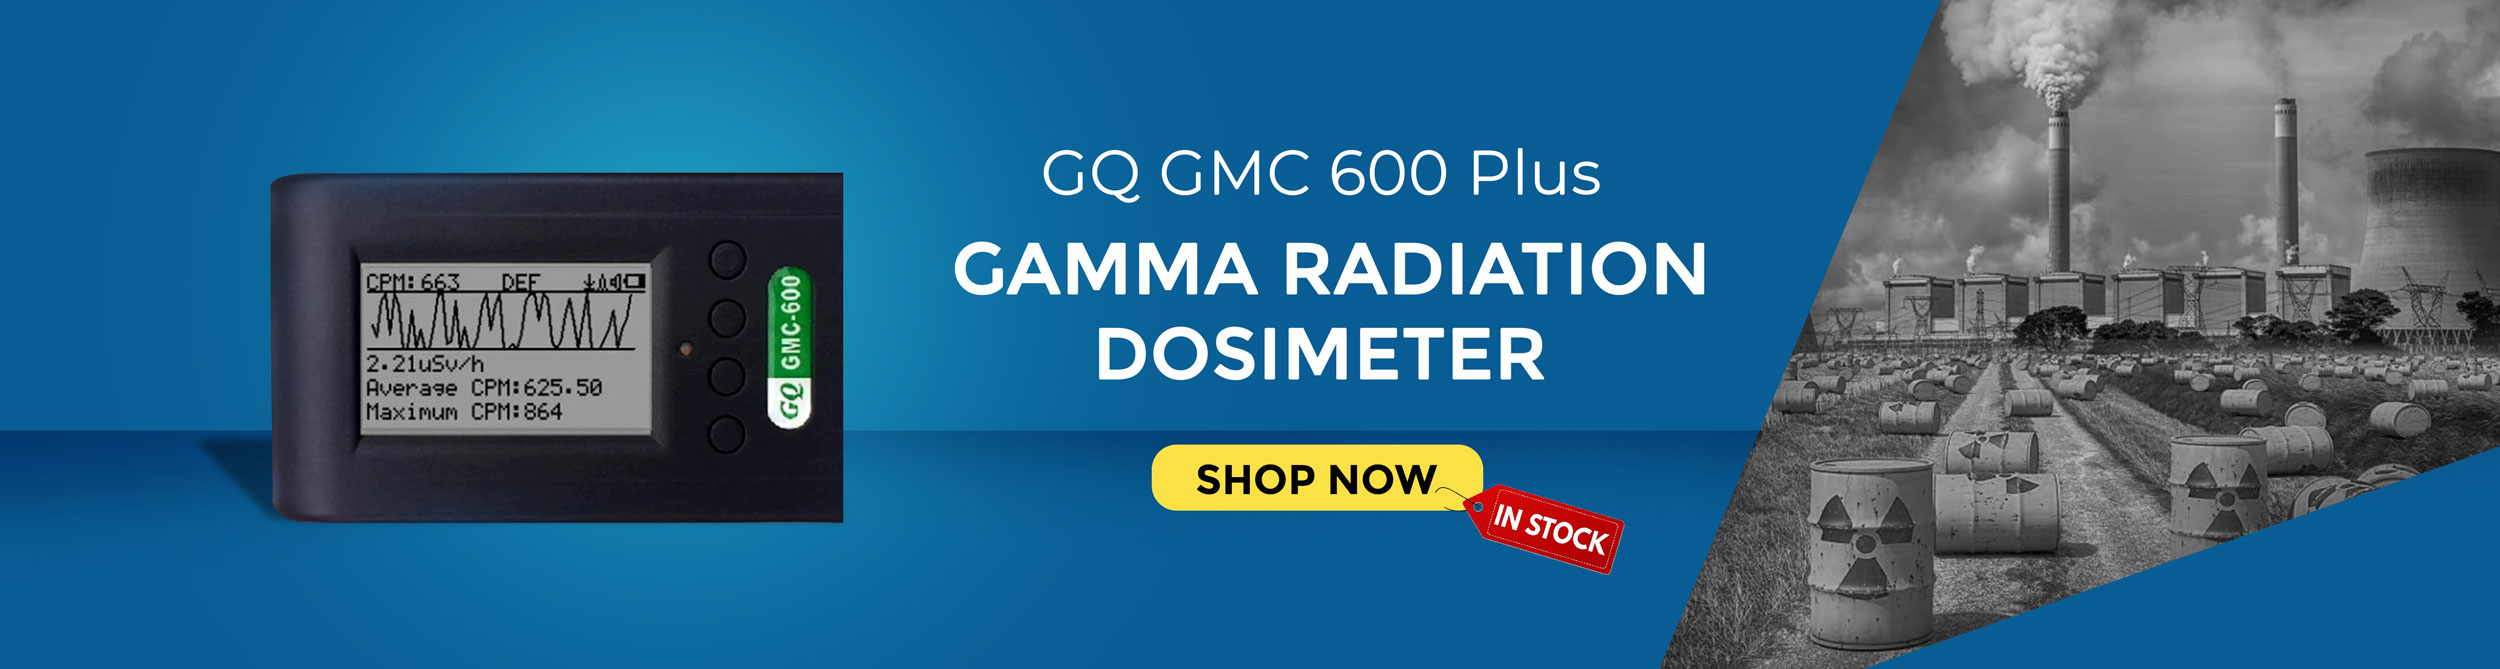 GQ GMC 600 Plus | Gamma Radiation Dosimeter